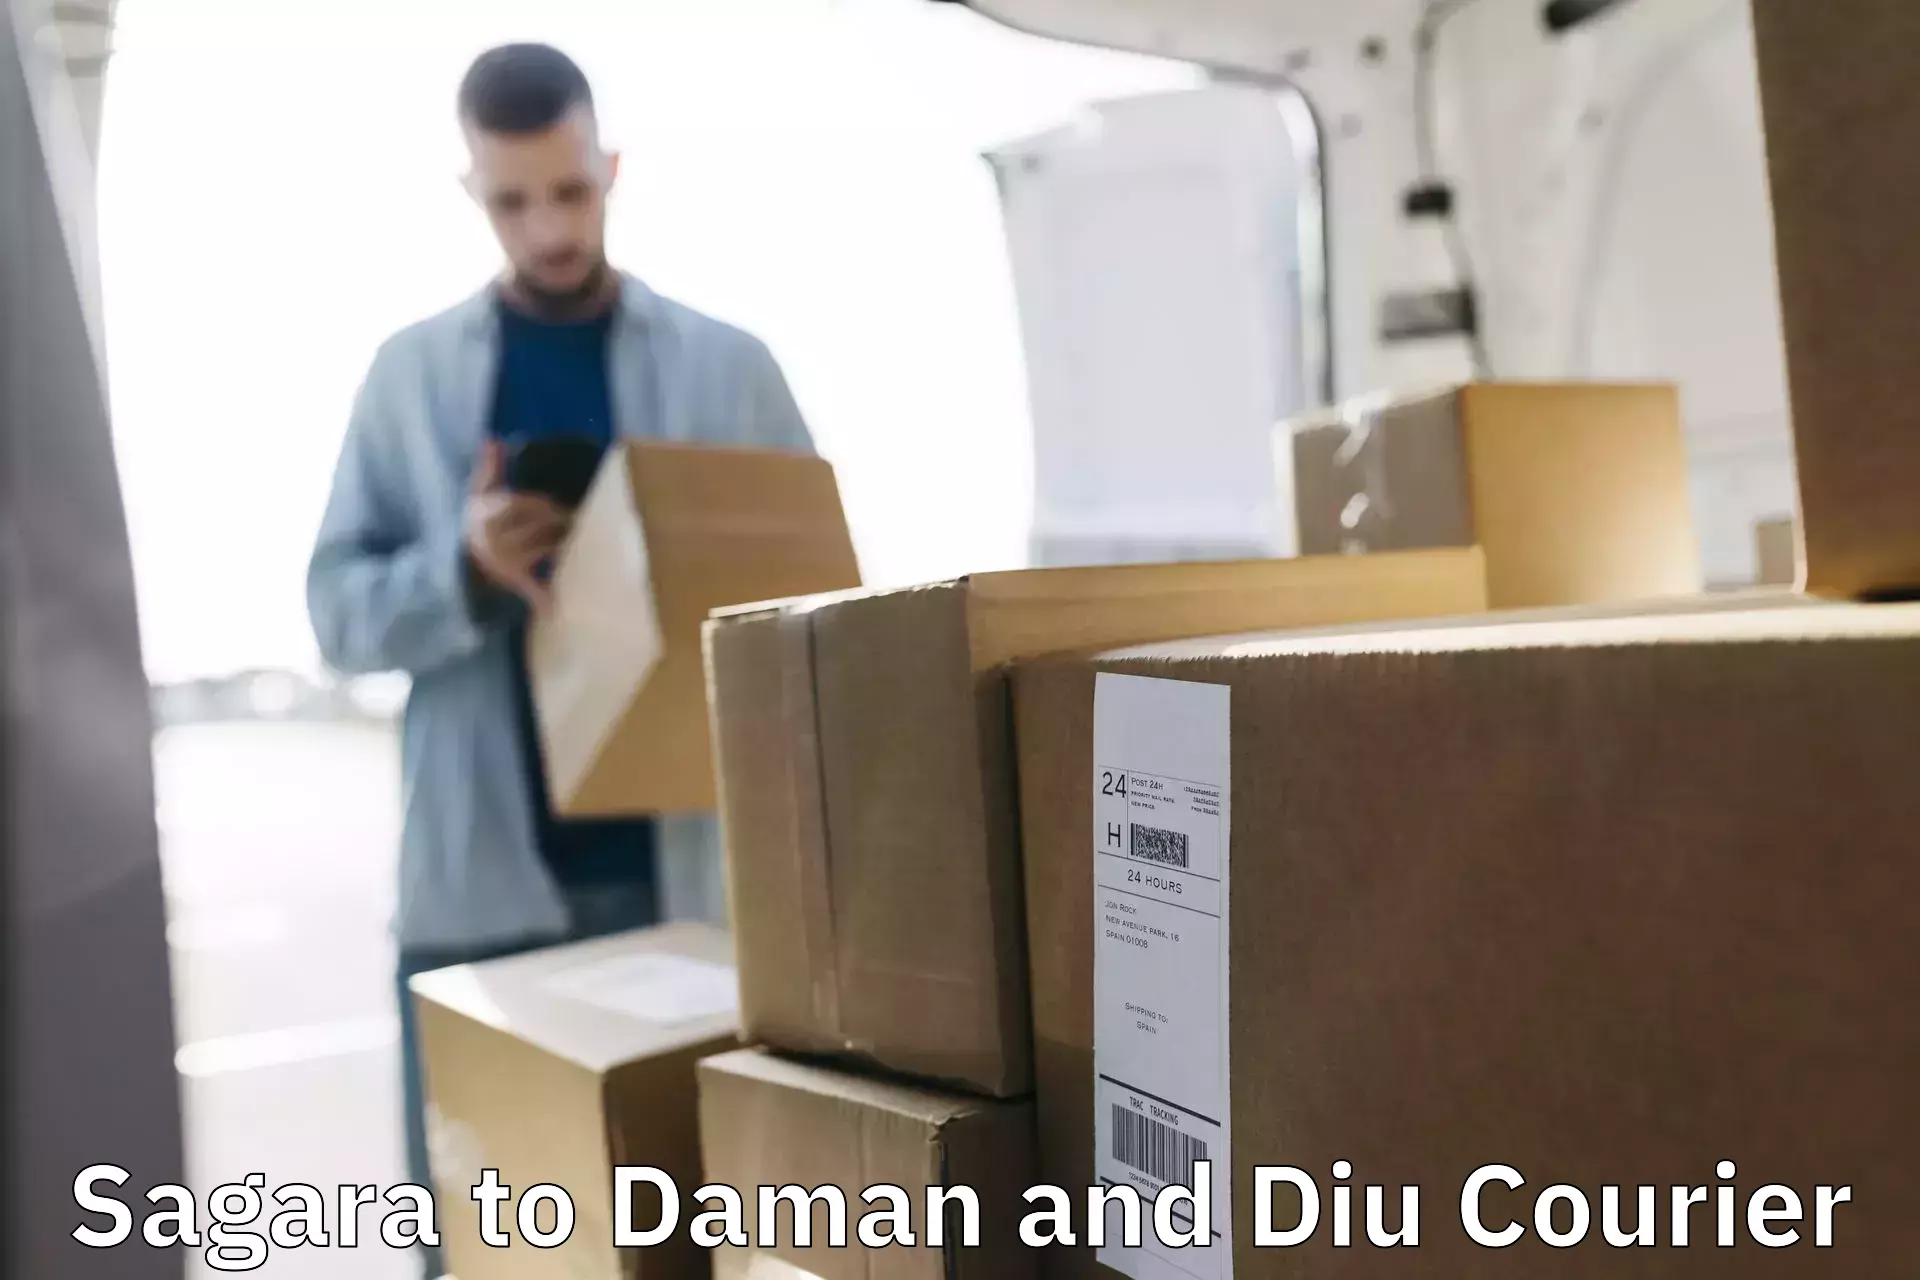 Cash on delivery service Sagara to Daman